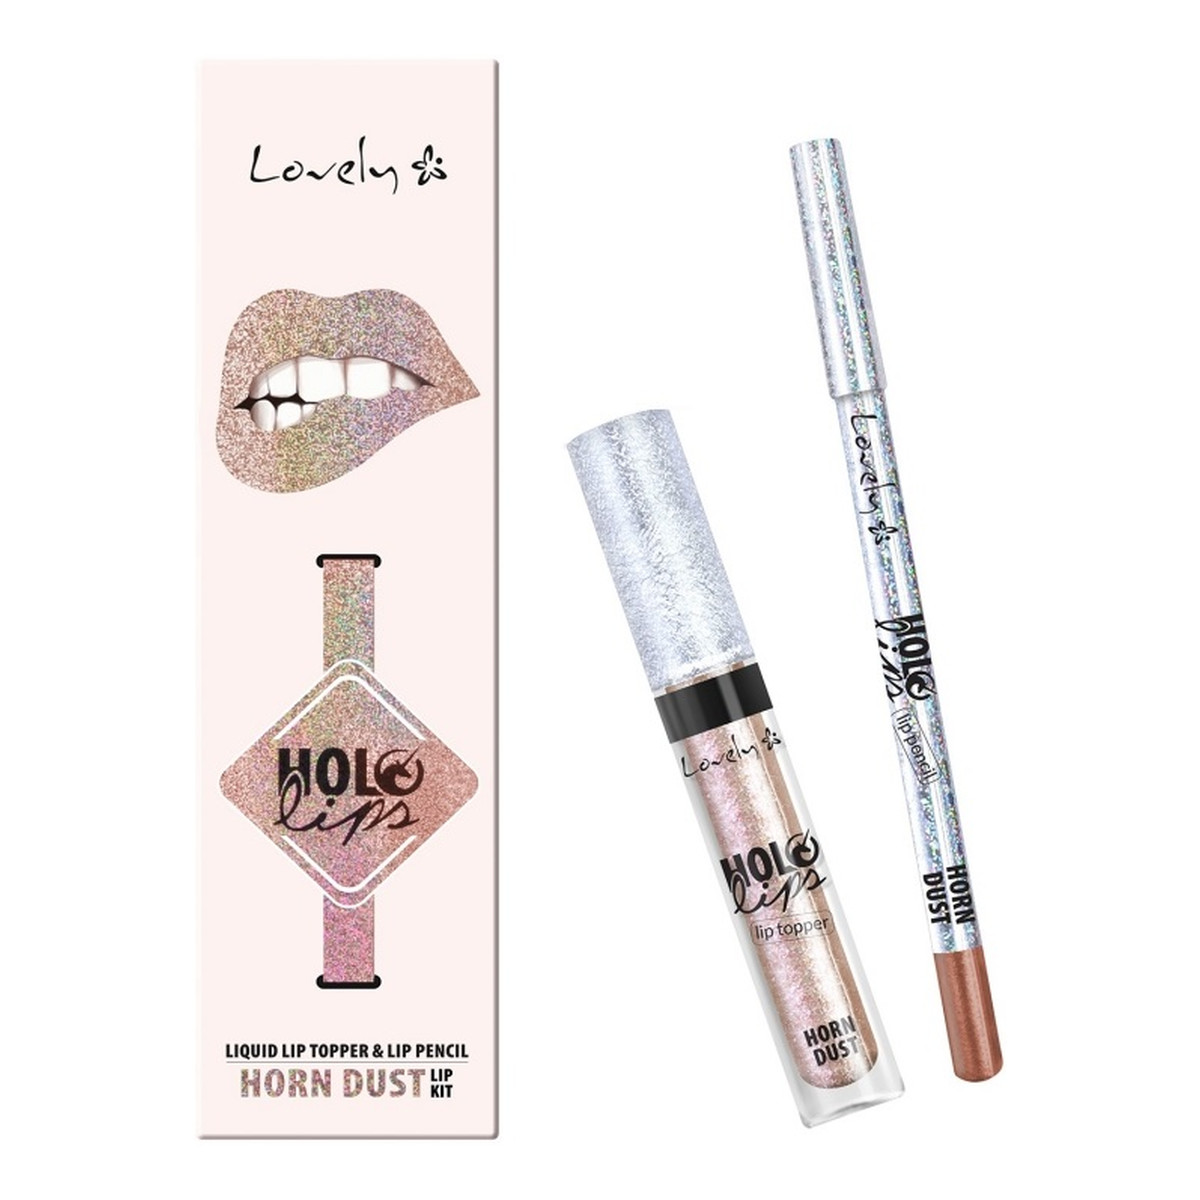 Lovely Holo Lips Liquid Lip Topper & Lip Pencil wielofunkcyjny zestaw do makijażu